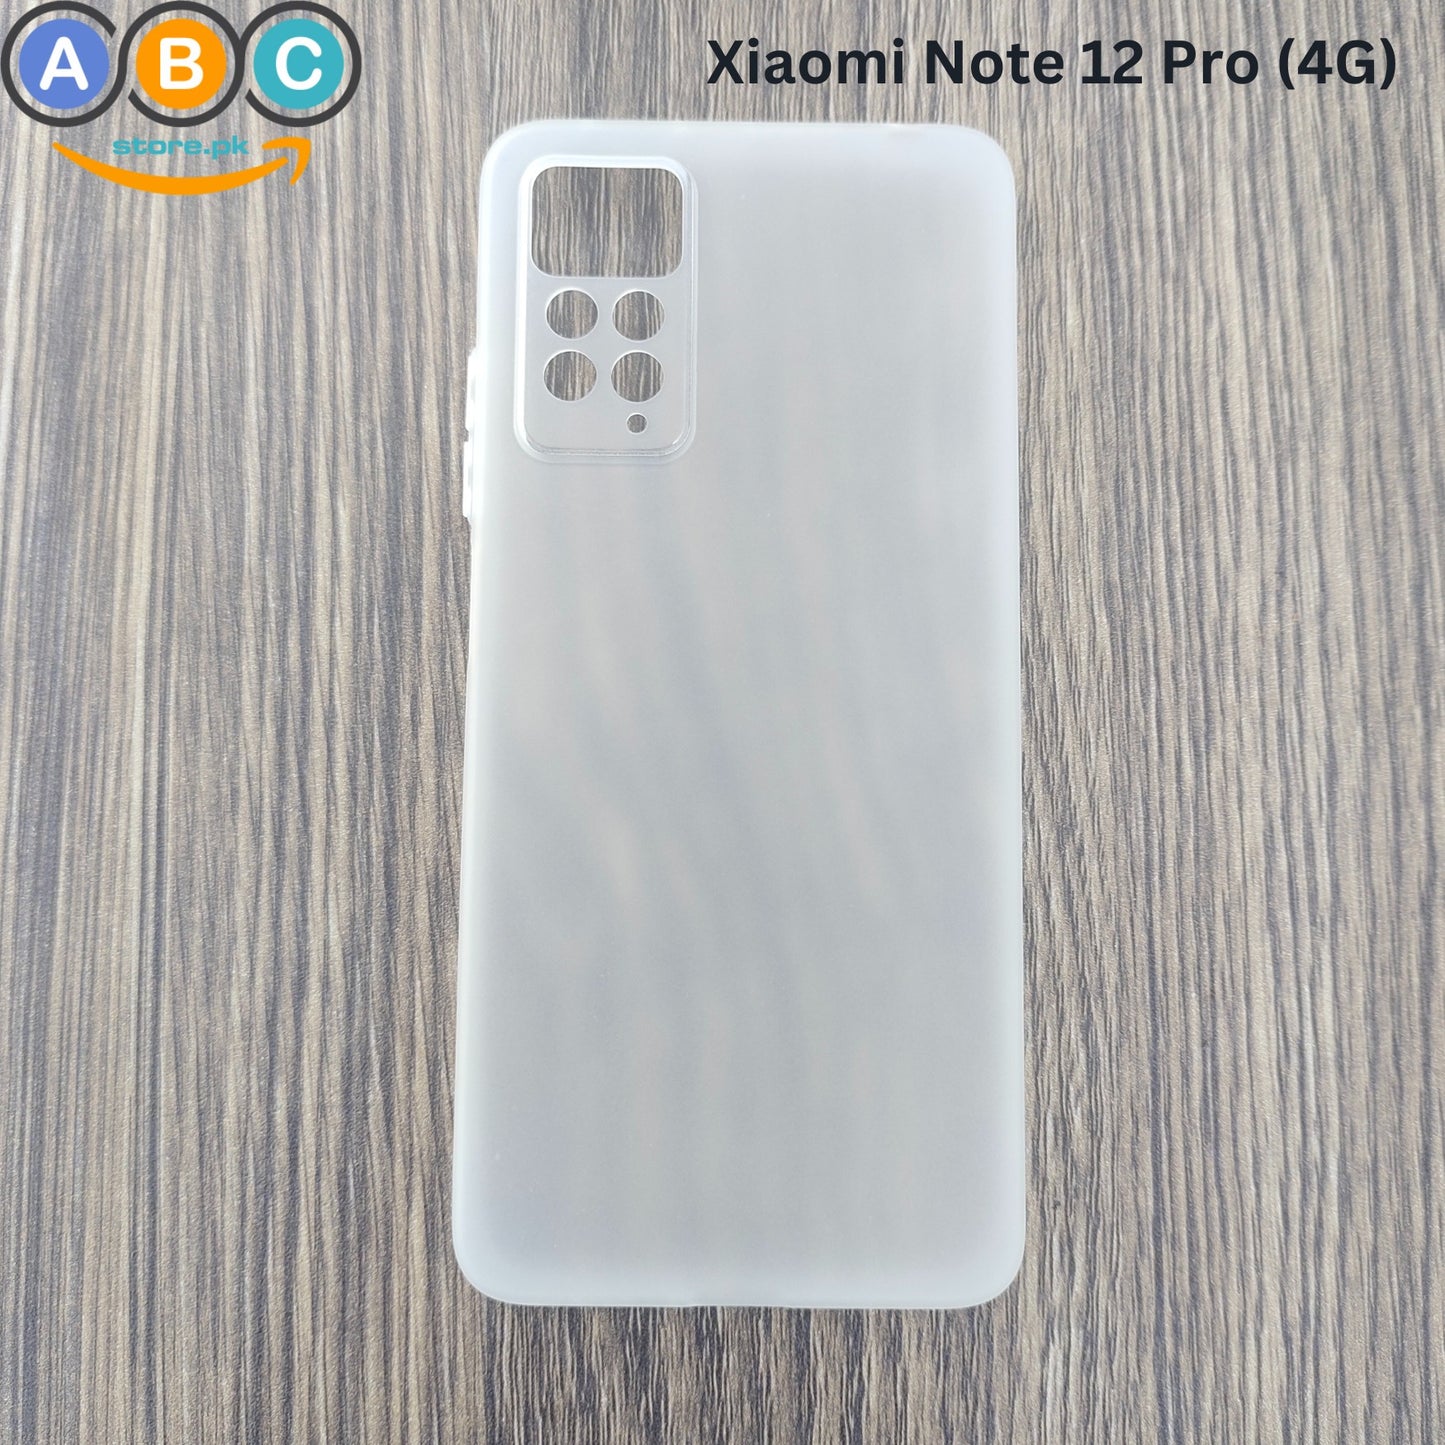 Xiaomi Redmi Note 12 Pro (4G) Case, Soft Ultra-thin Matte Finish Light Weight Back Cover